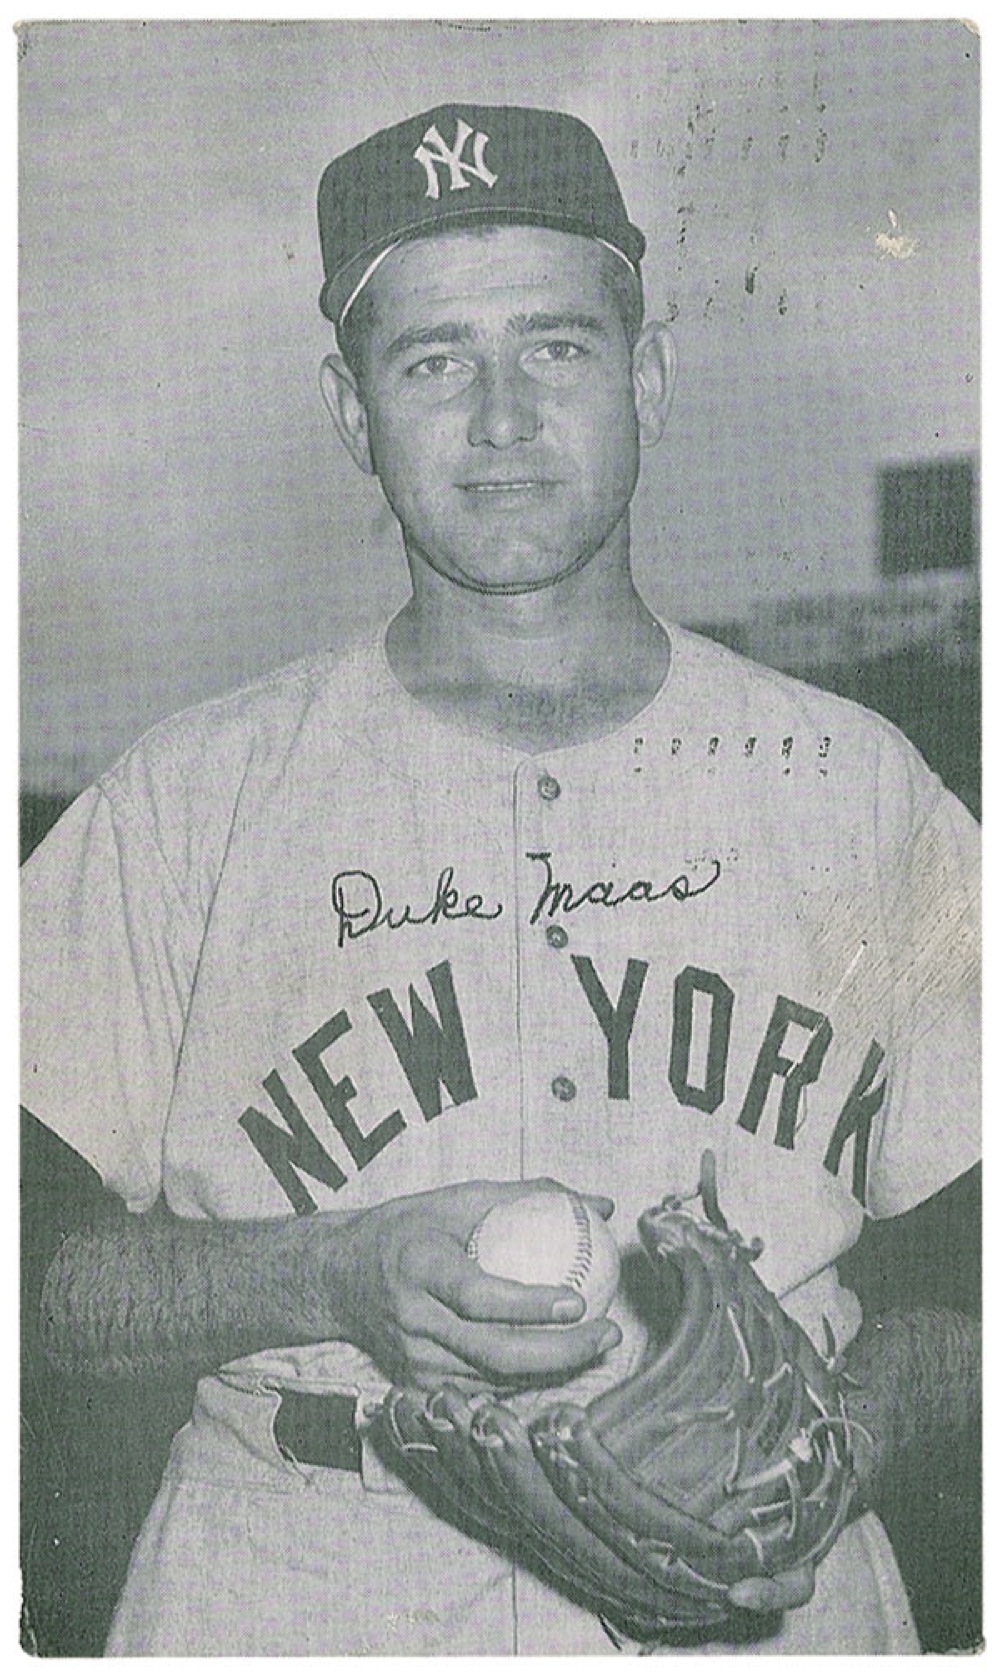 Lot #1471 NY Yankees: Duke Maas